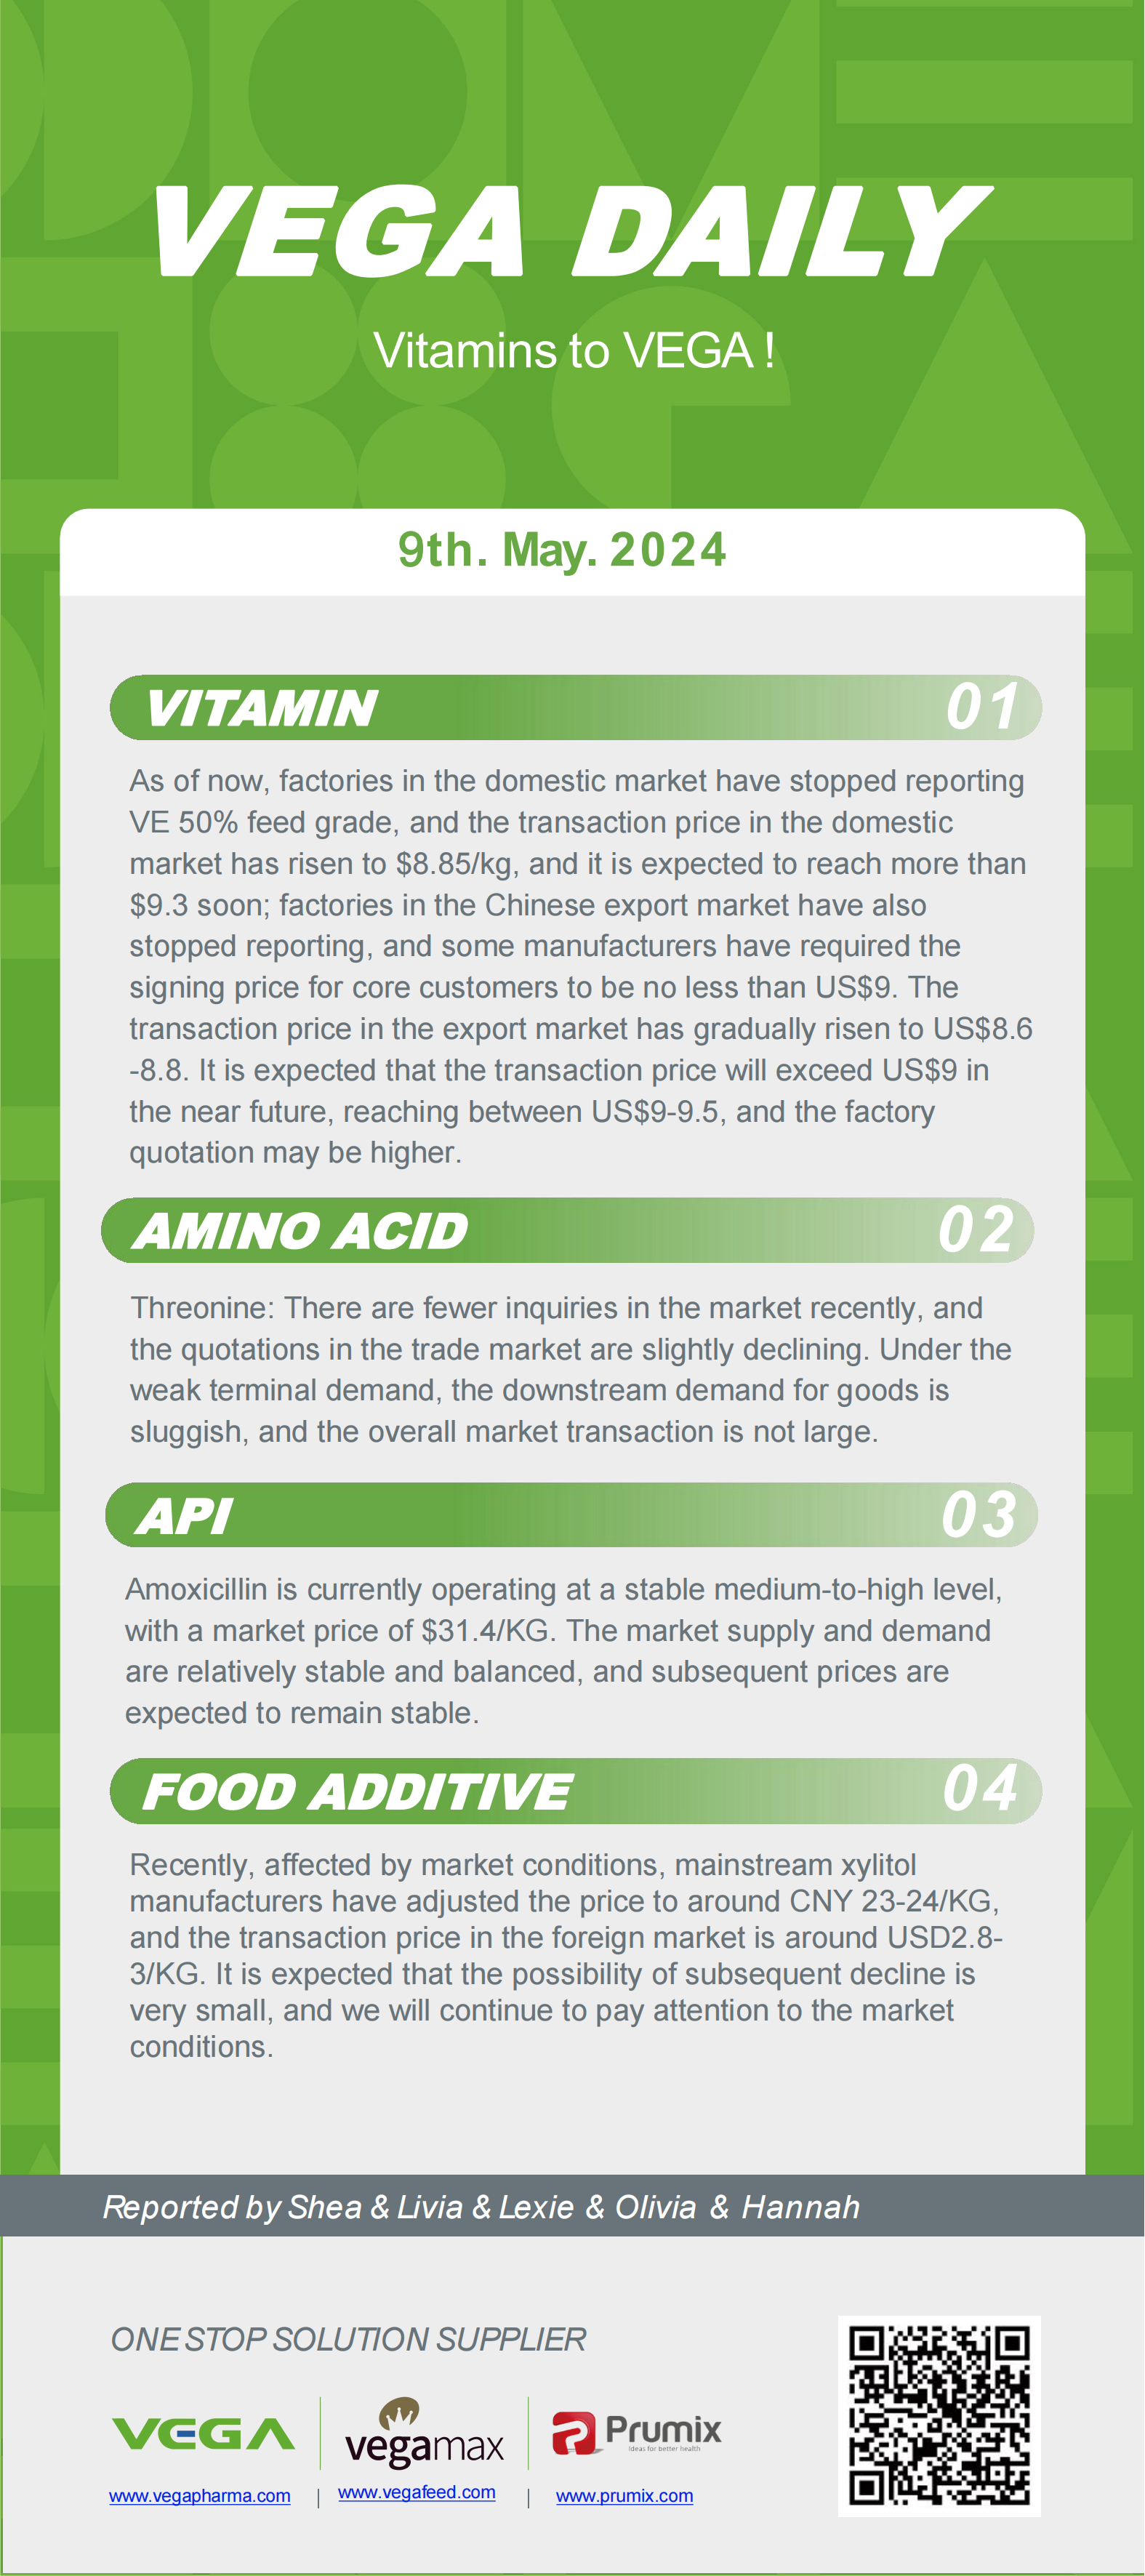 Vega Daily Dated on May 9th 2024 Vitamin Amino Acid APl Food Additives.png